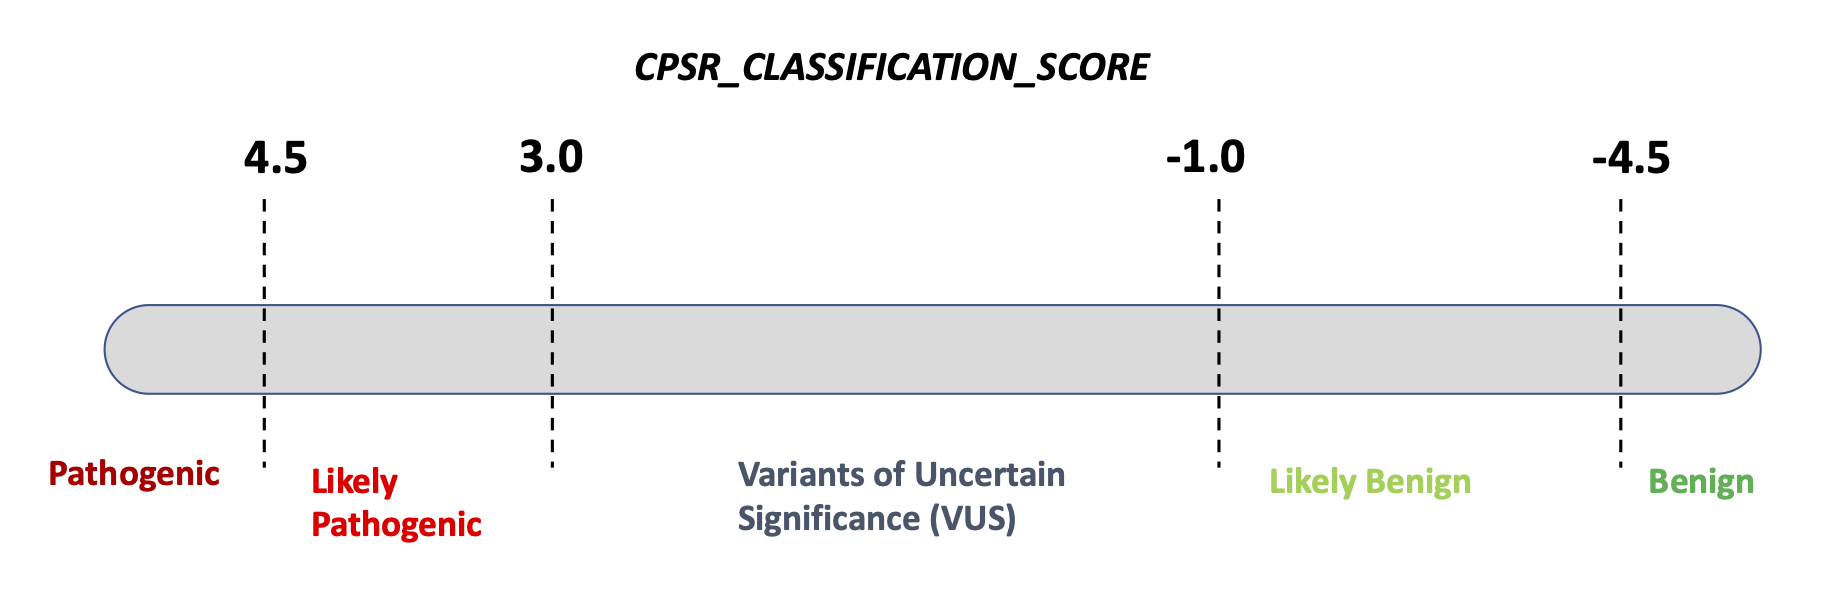 Classification Scores